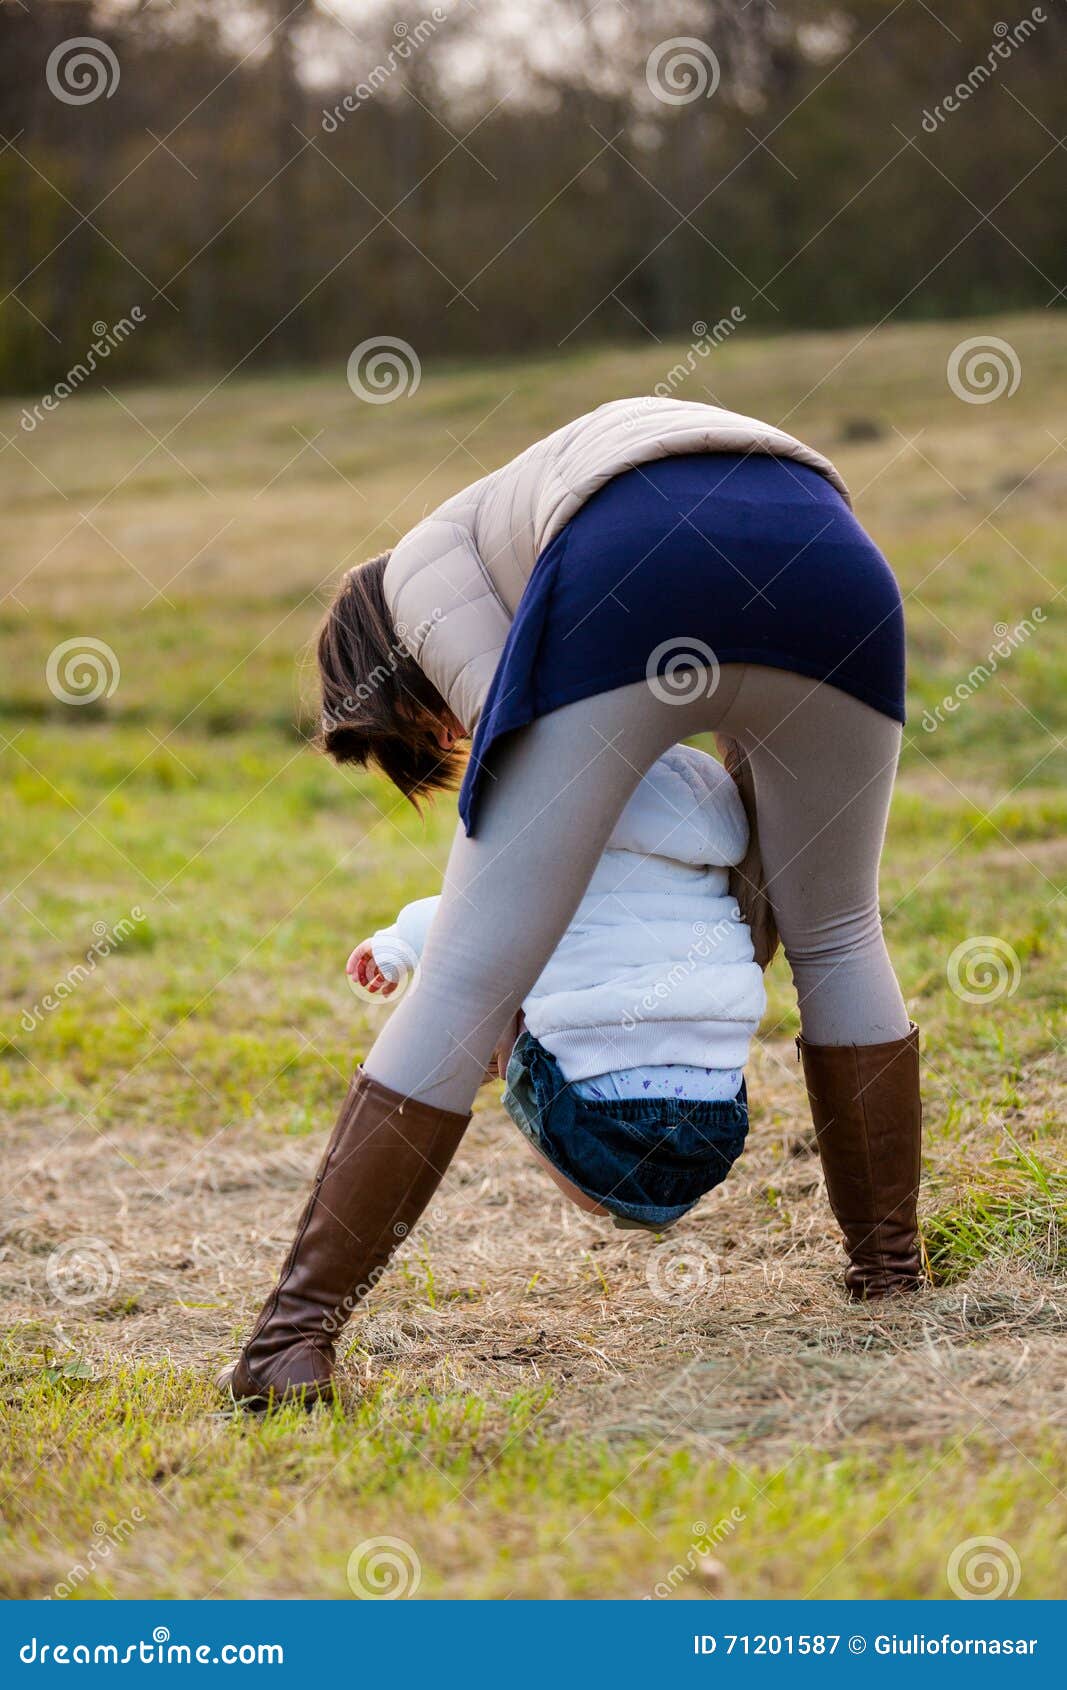 amelia zoe add women peeing outdoors photo